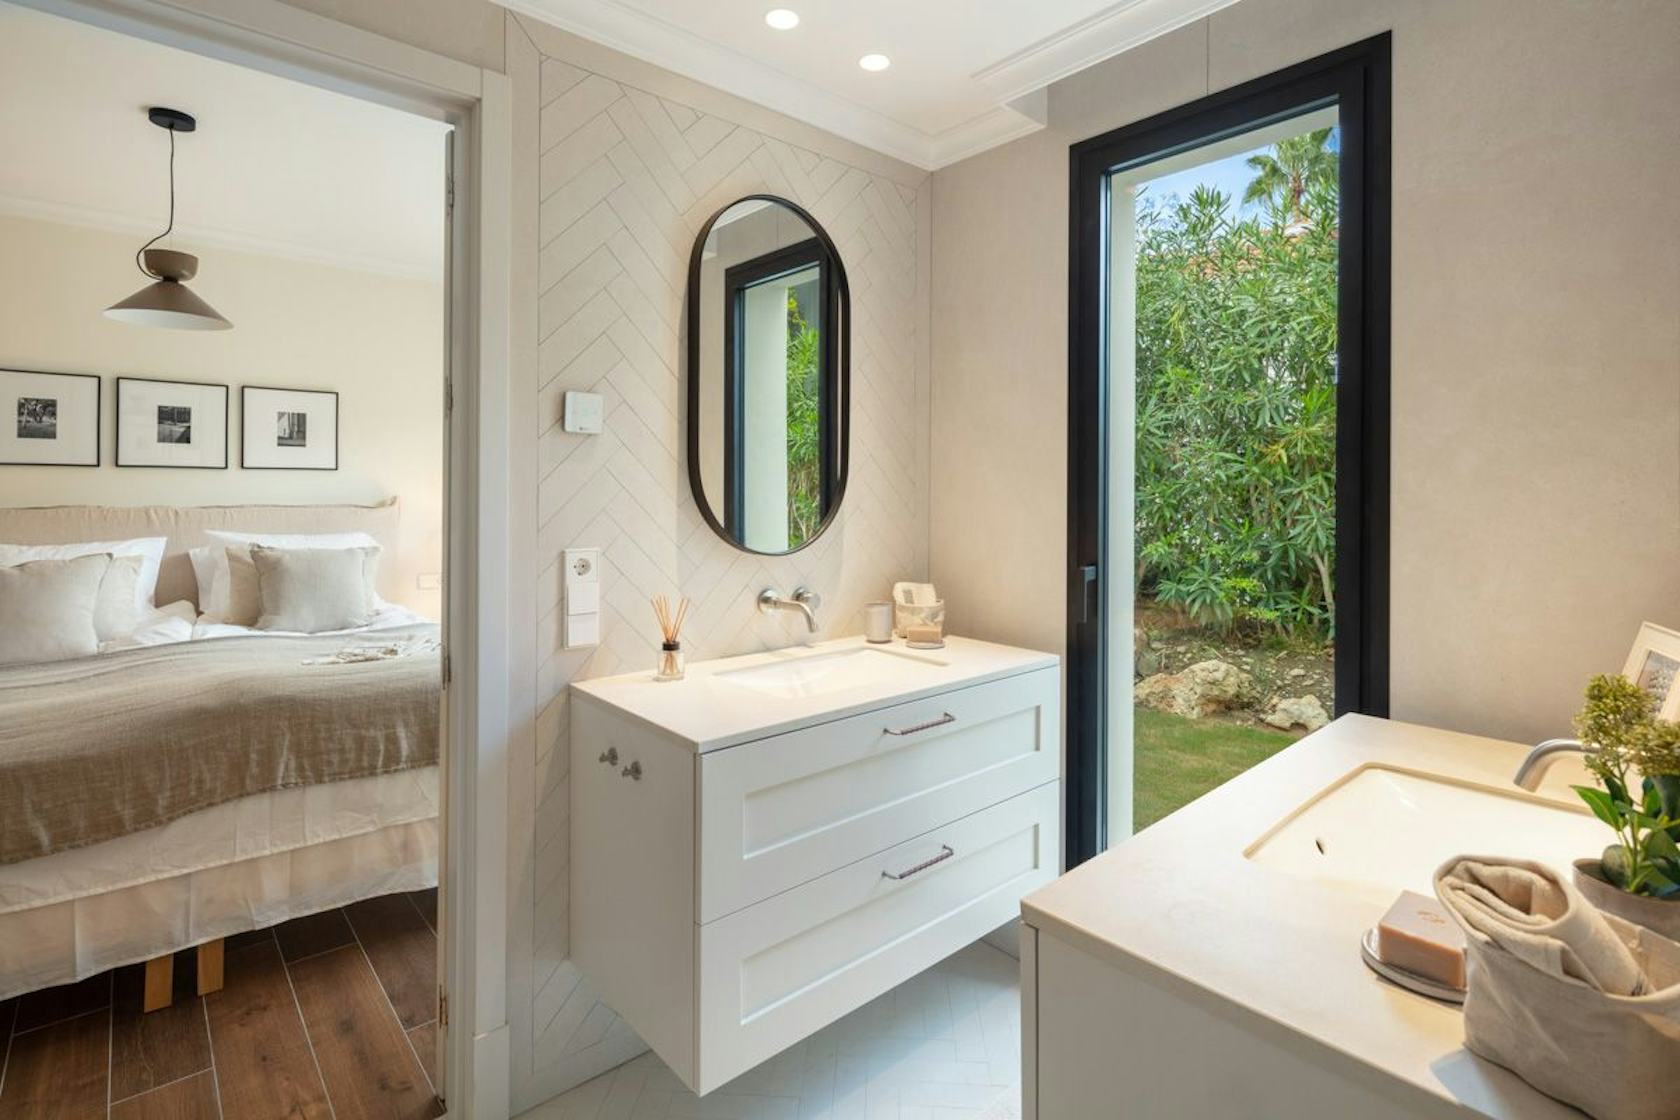 corner interior design indoors home decor sink faucet sink bathing